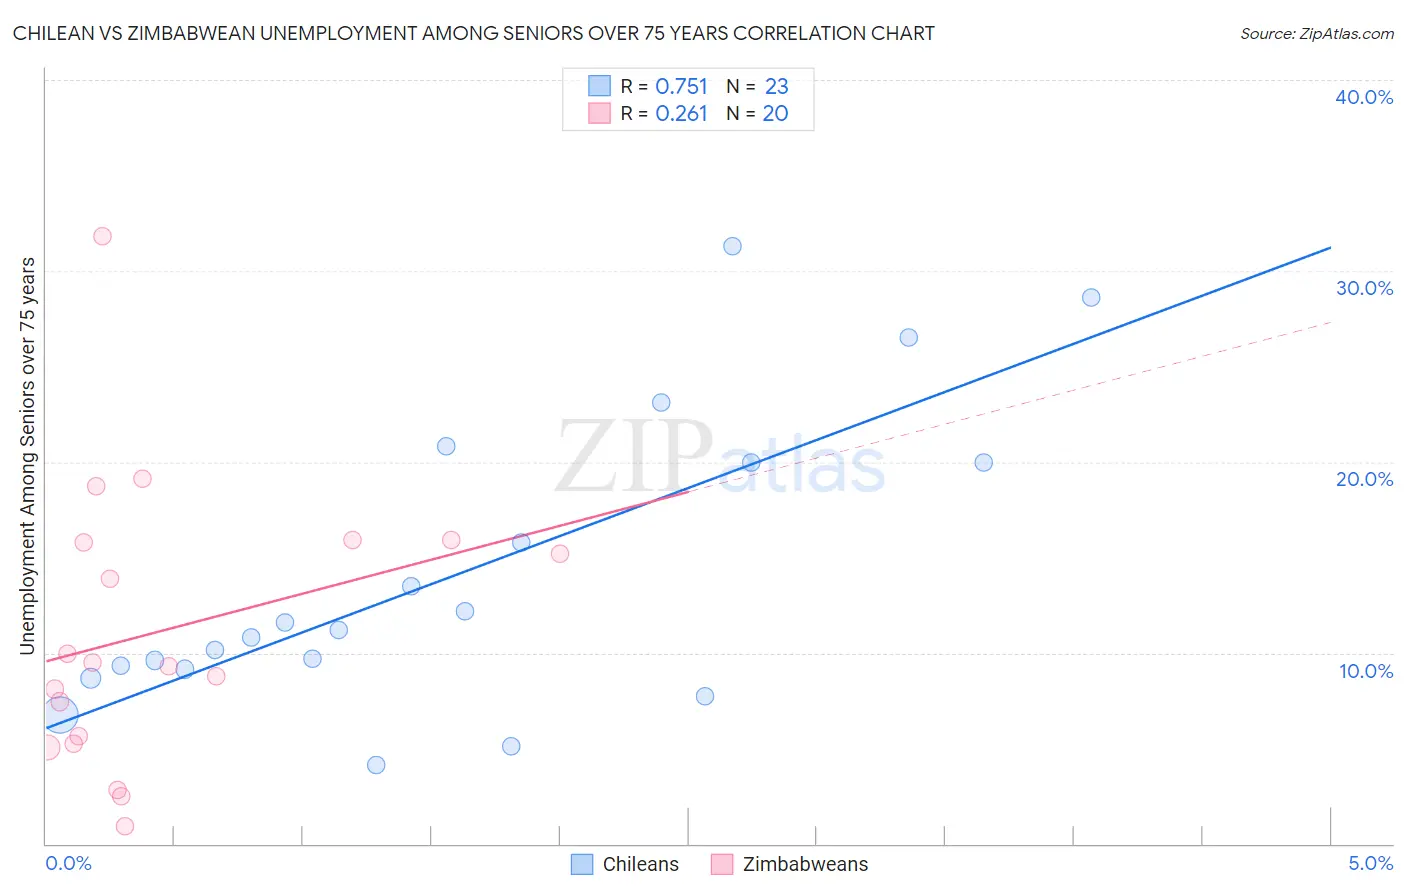 Chilean vs Zimbabwean Unemployment Among Seniors over 75 years